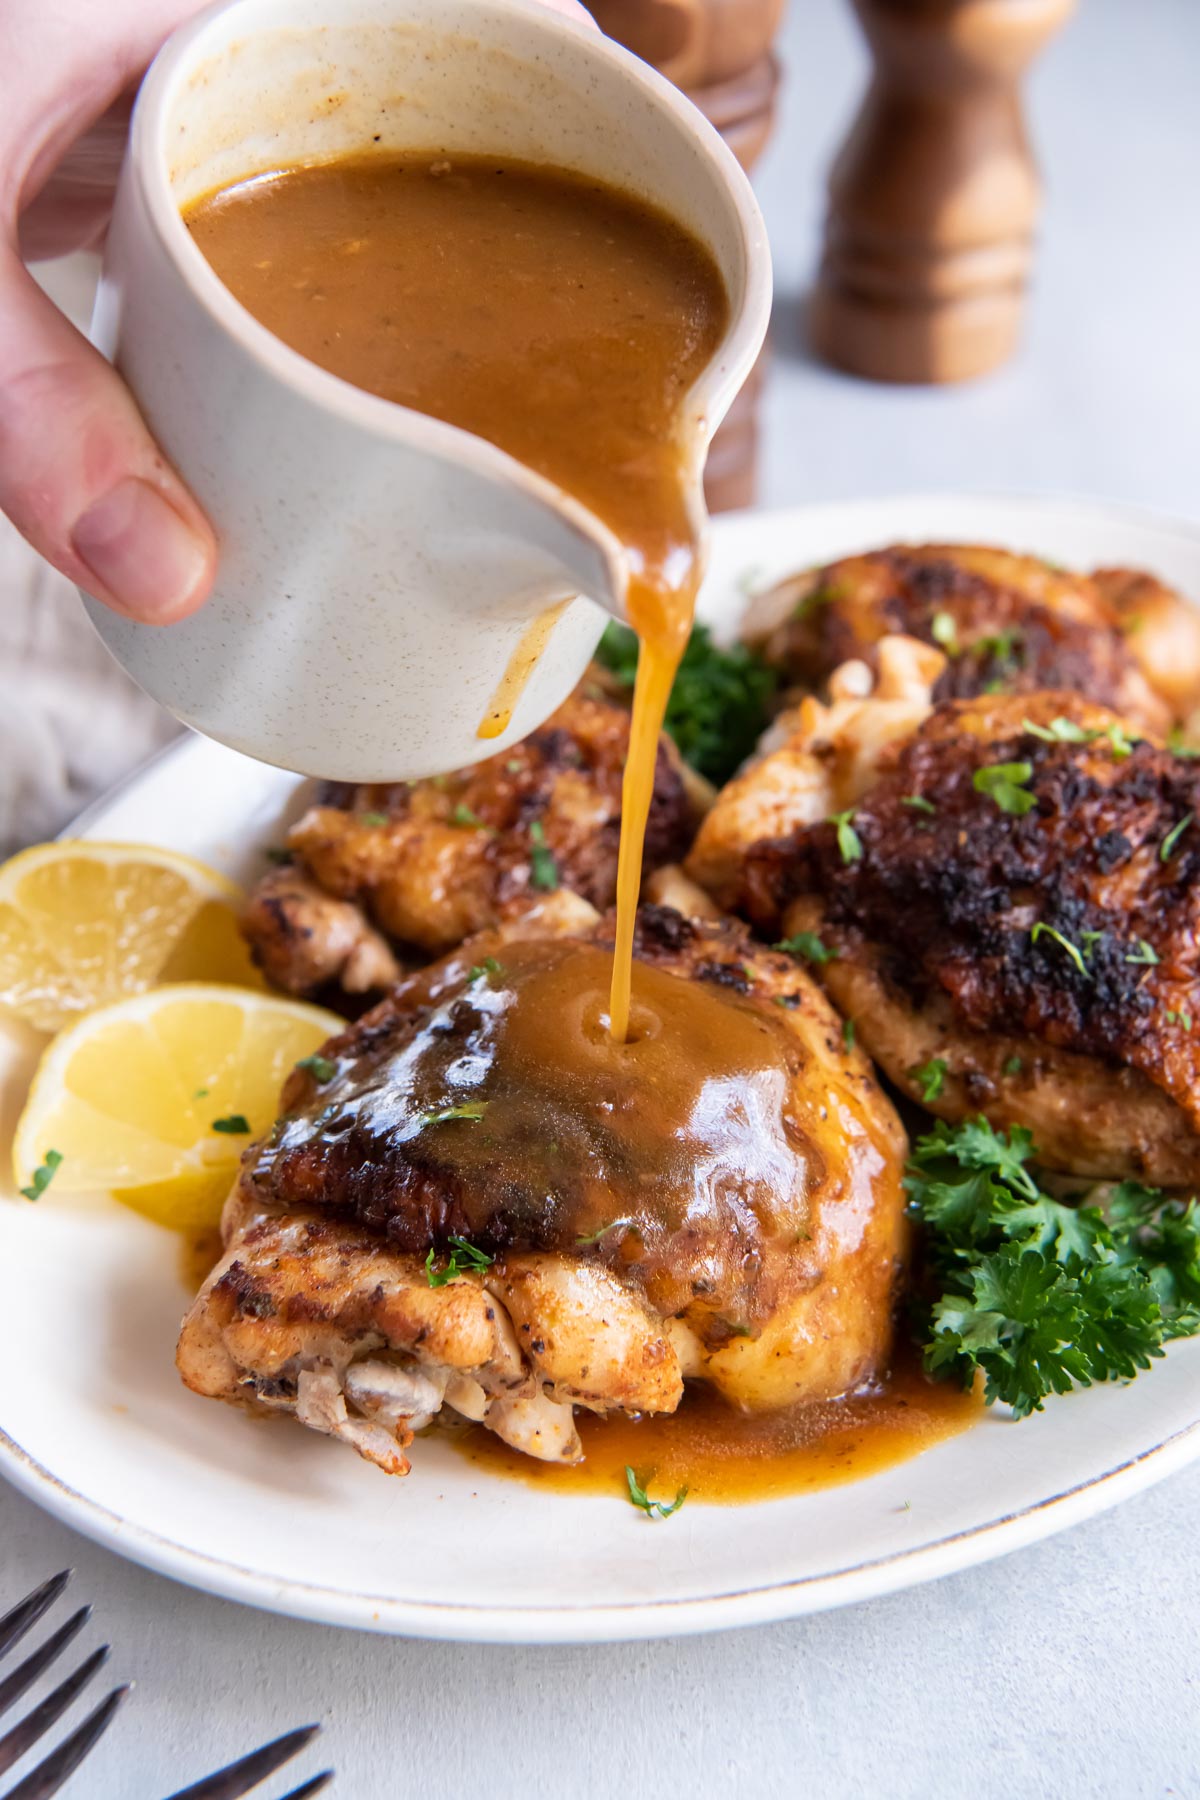 Pouring gravy onto chicken thigh on platter.